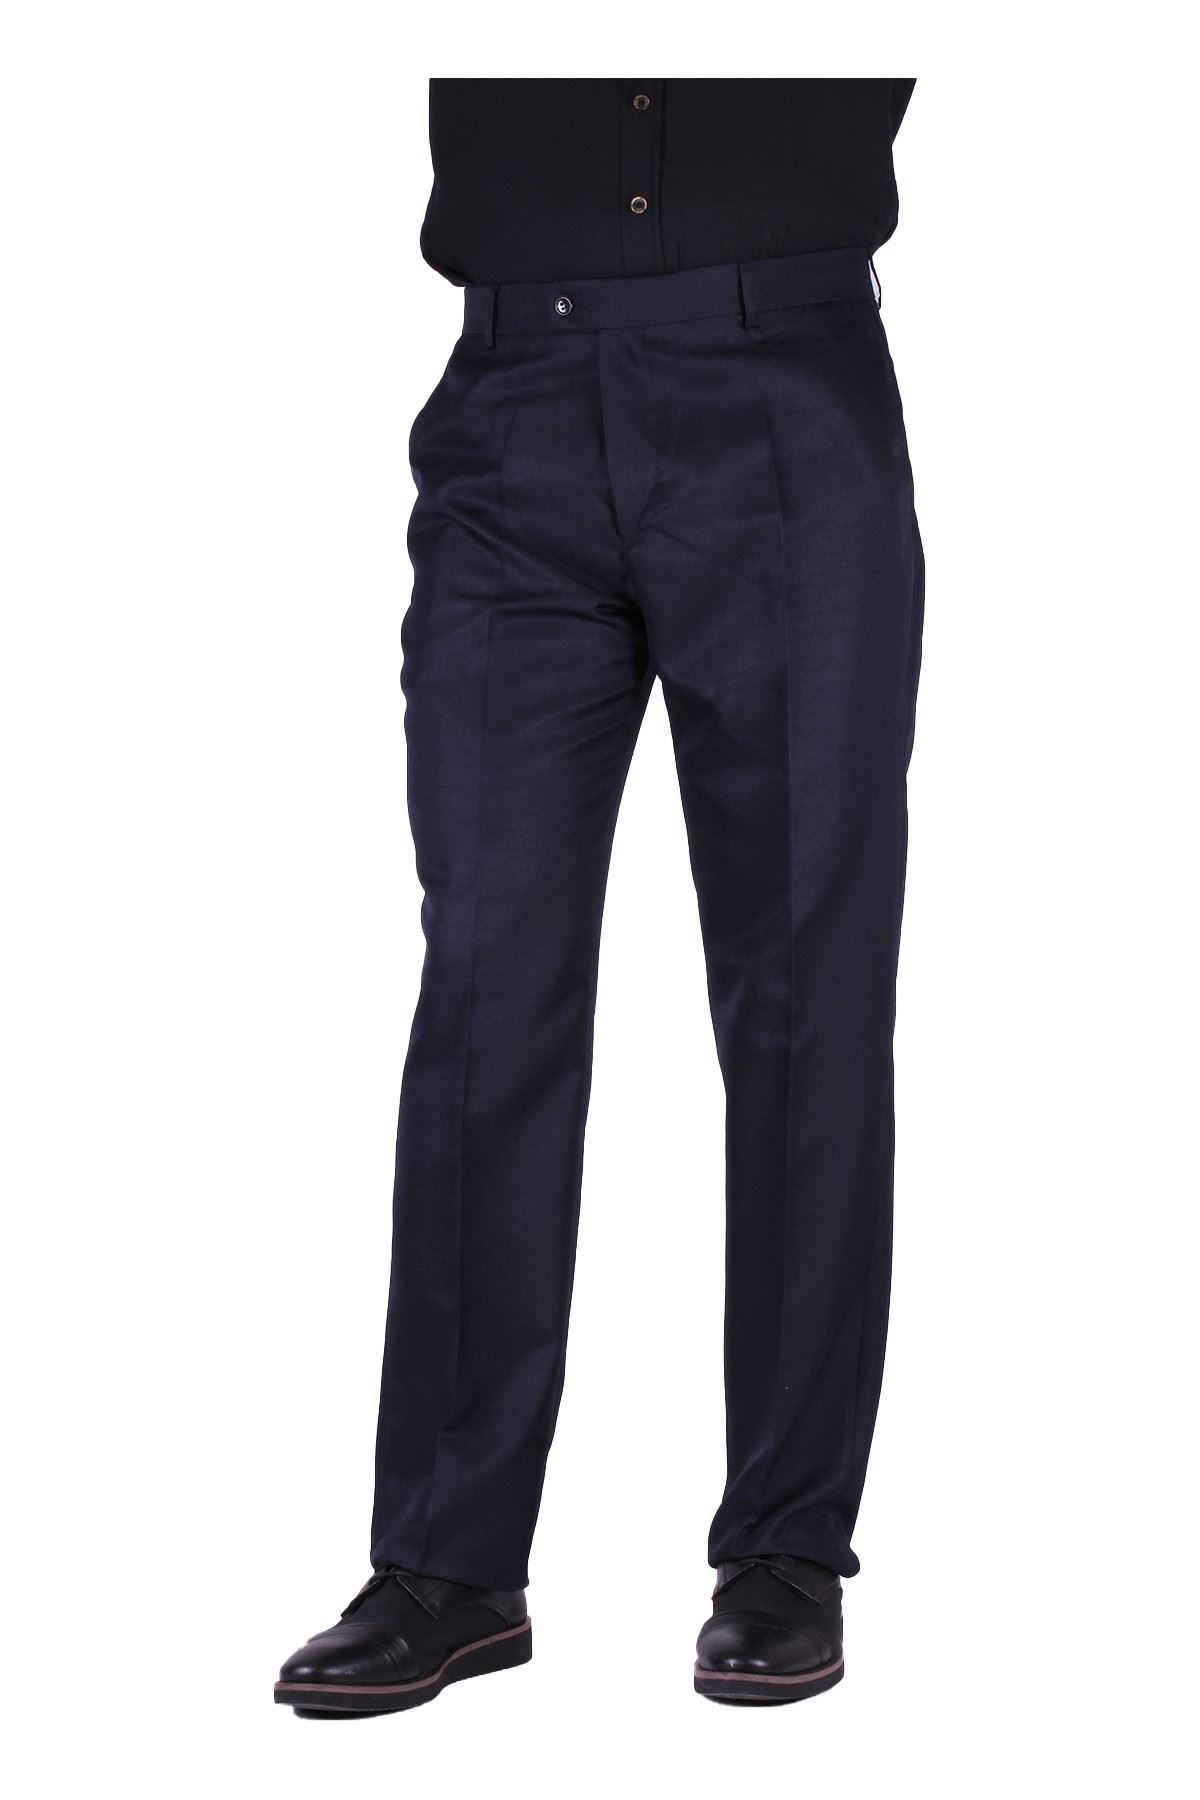 Giyinsen Erkek Lacivert Klasik Pantolon - 23KL71M57002